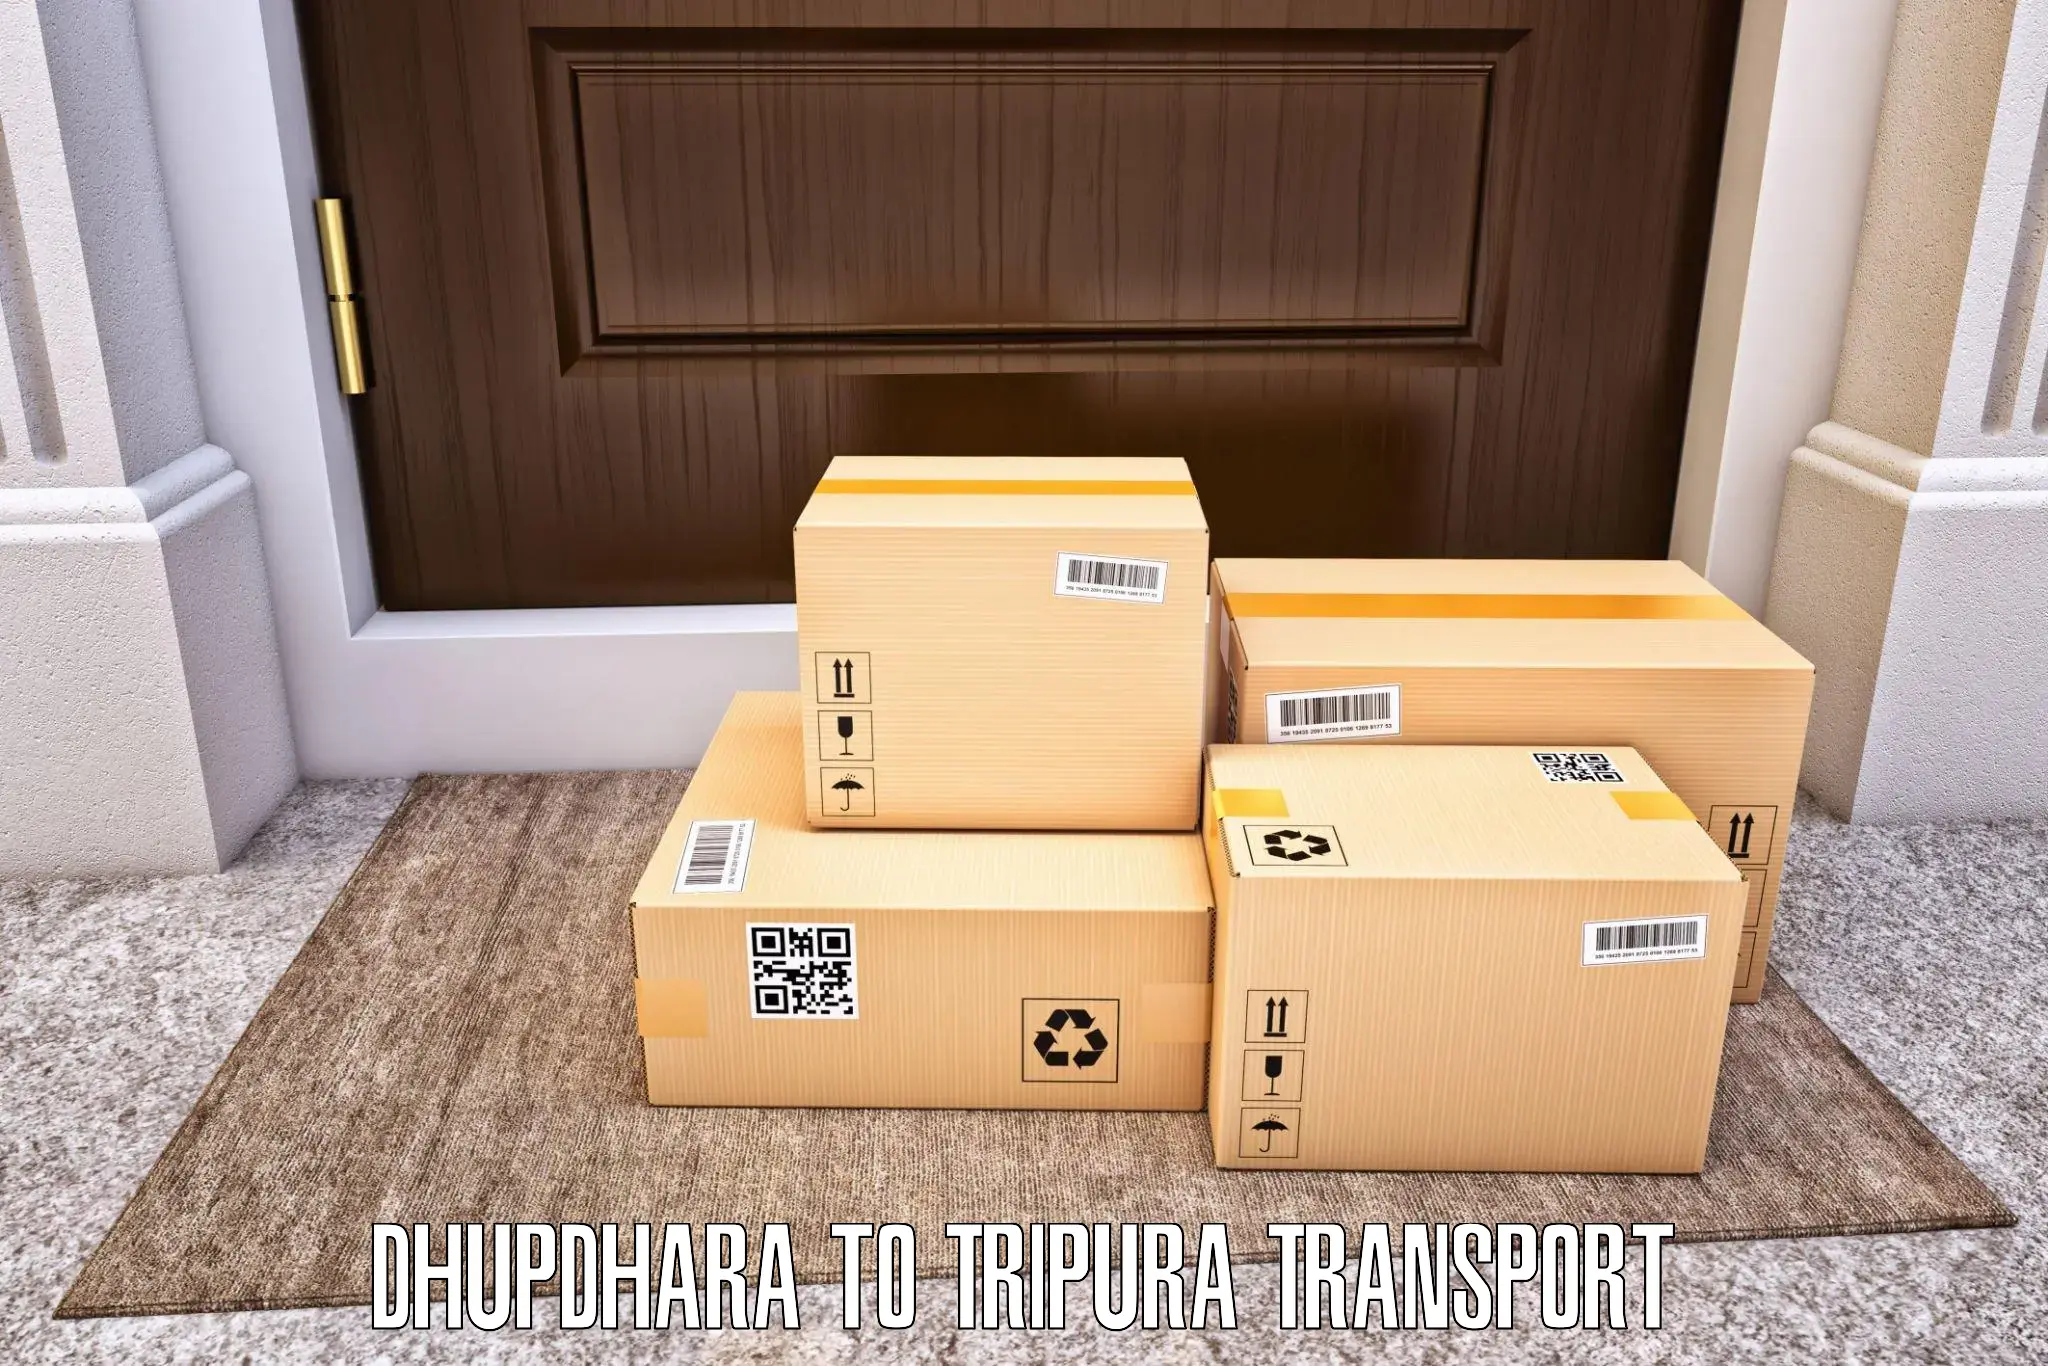 Air freight transport services Dhupdhara to Tripura